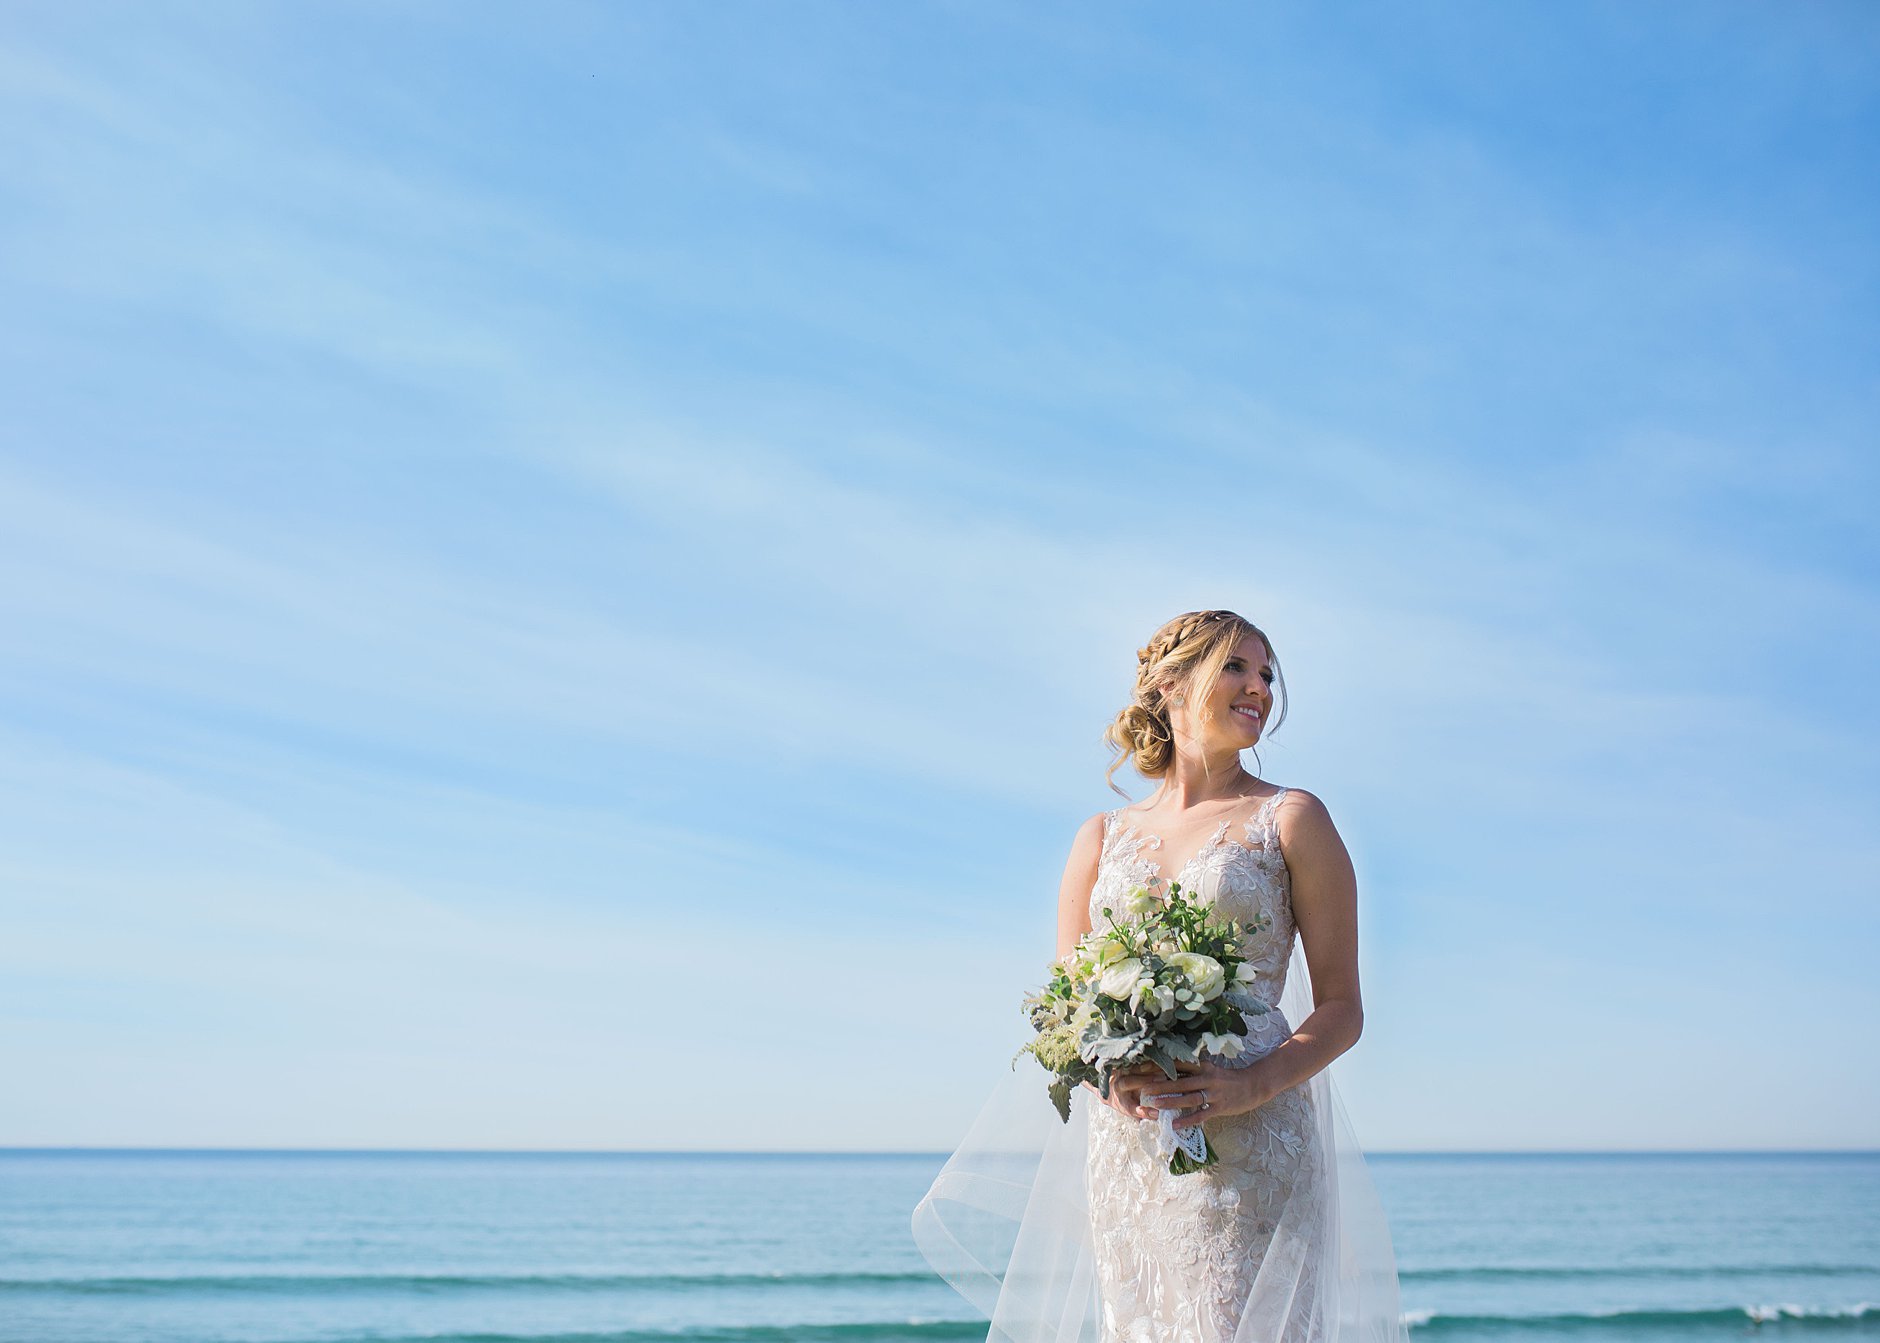 Del Mar Wedding. Ocean background portrait of a bride looking happy and radiant. 